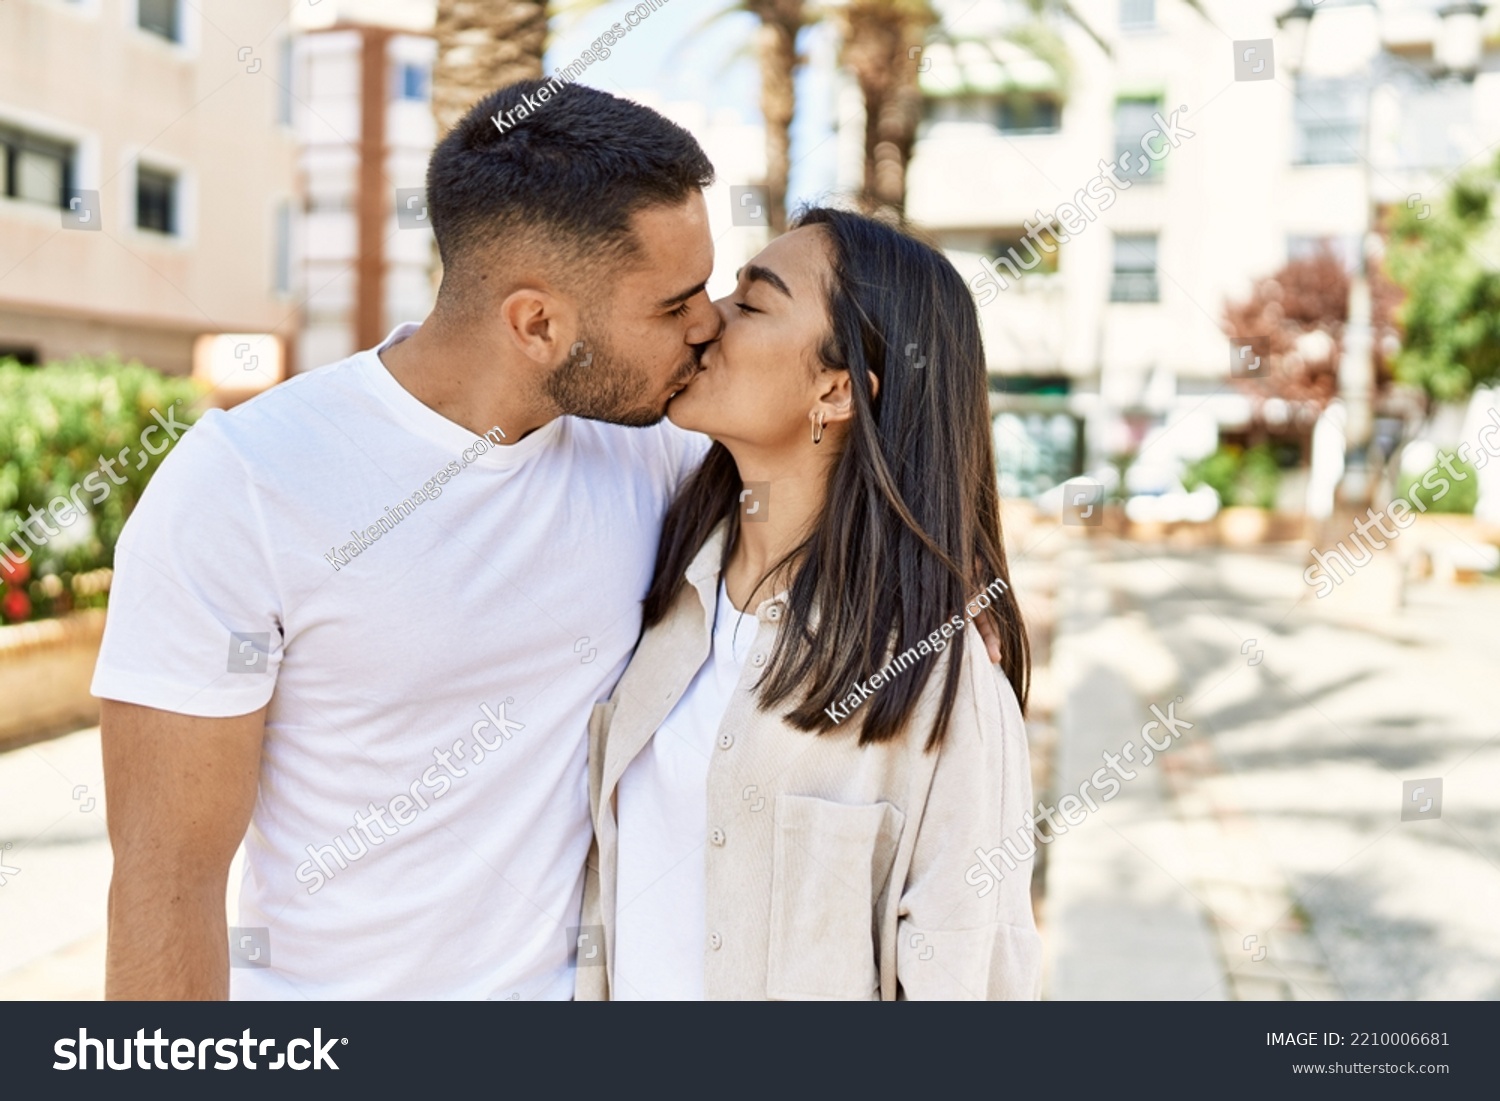 alex kaiserman recommends hot latin girls kissing pic